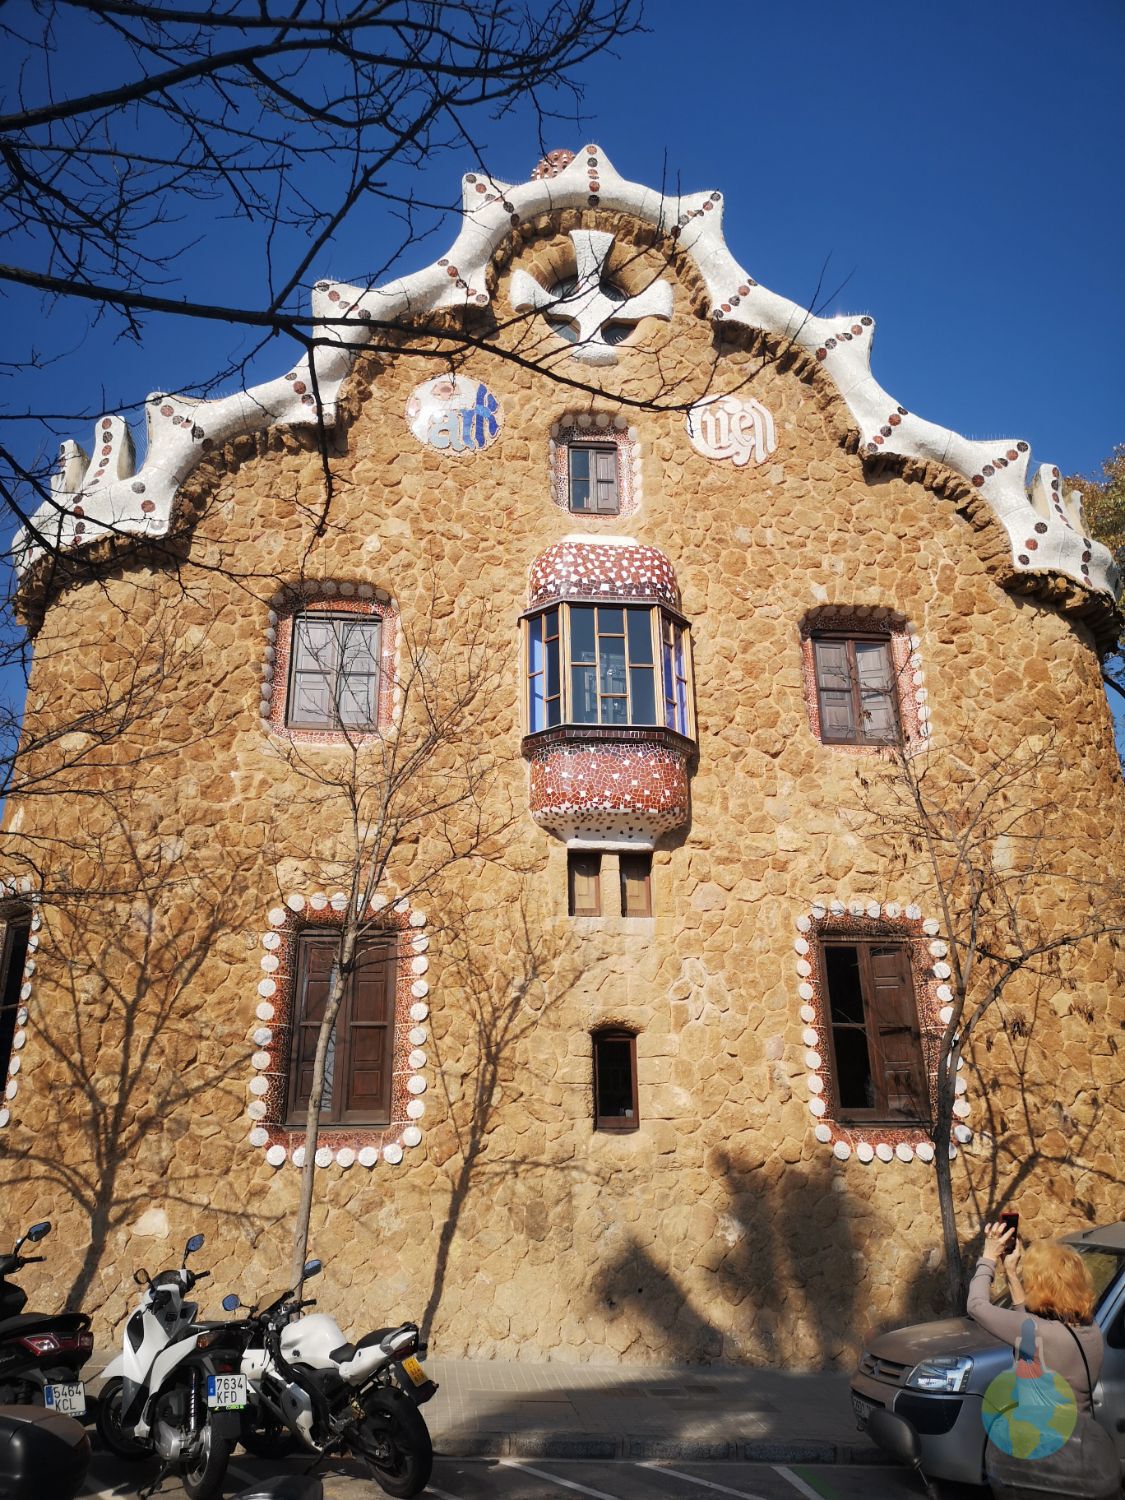 Barcelona Parc Guell Gaudi masterpiece plimbare relaxare arhitectura inovatie